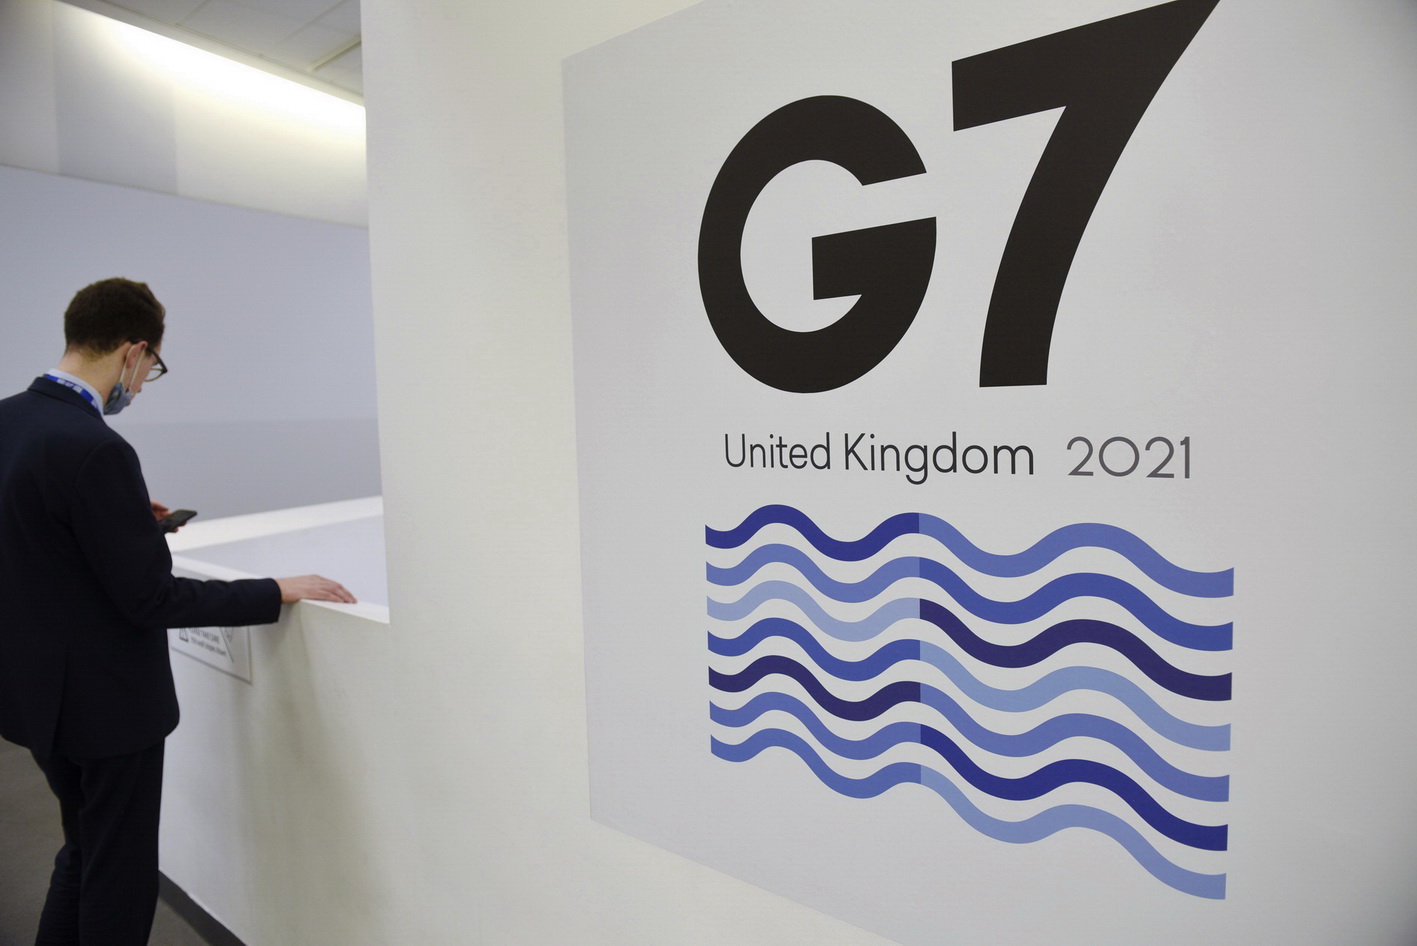 G7 Summit 2021 in Liverpool photos by David J Colbran